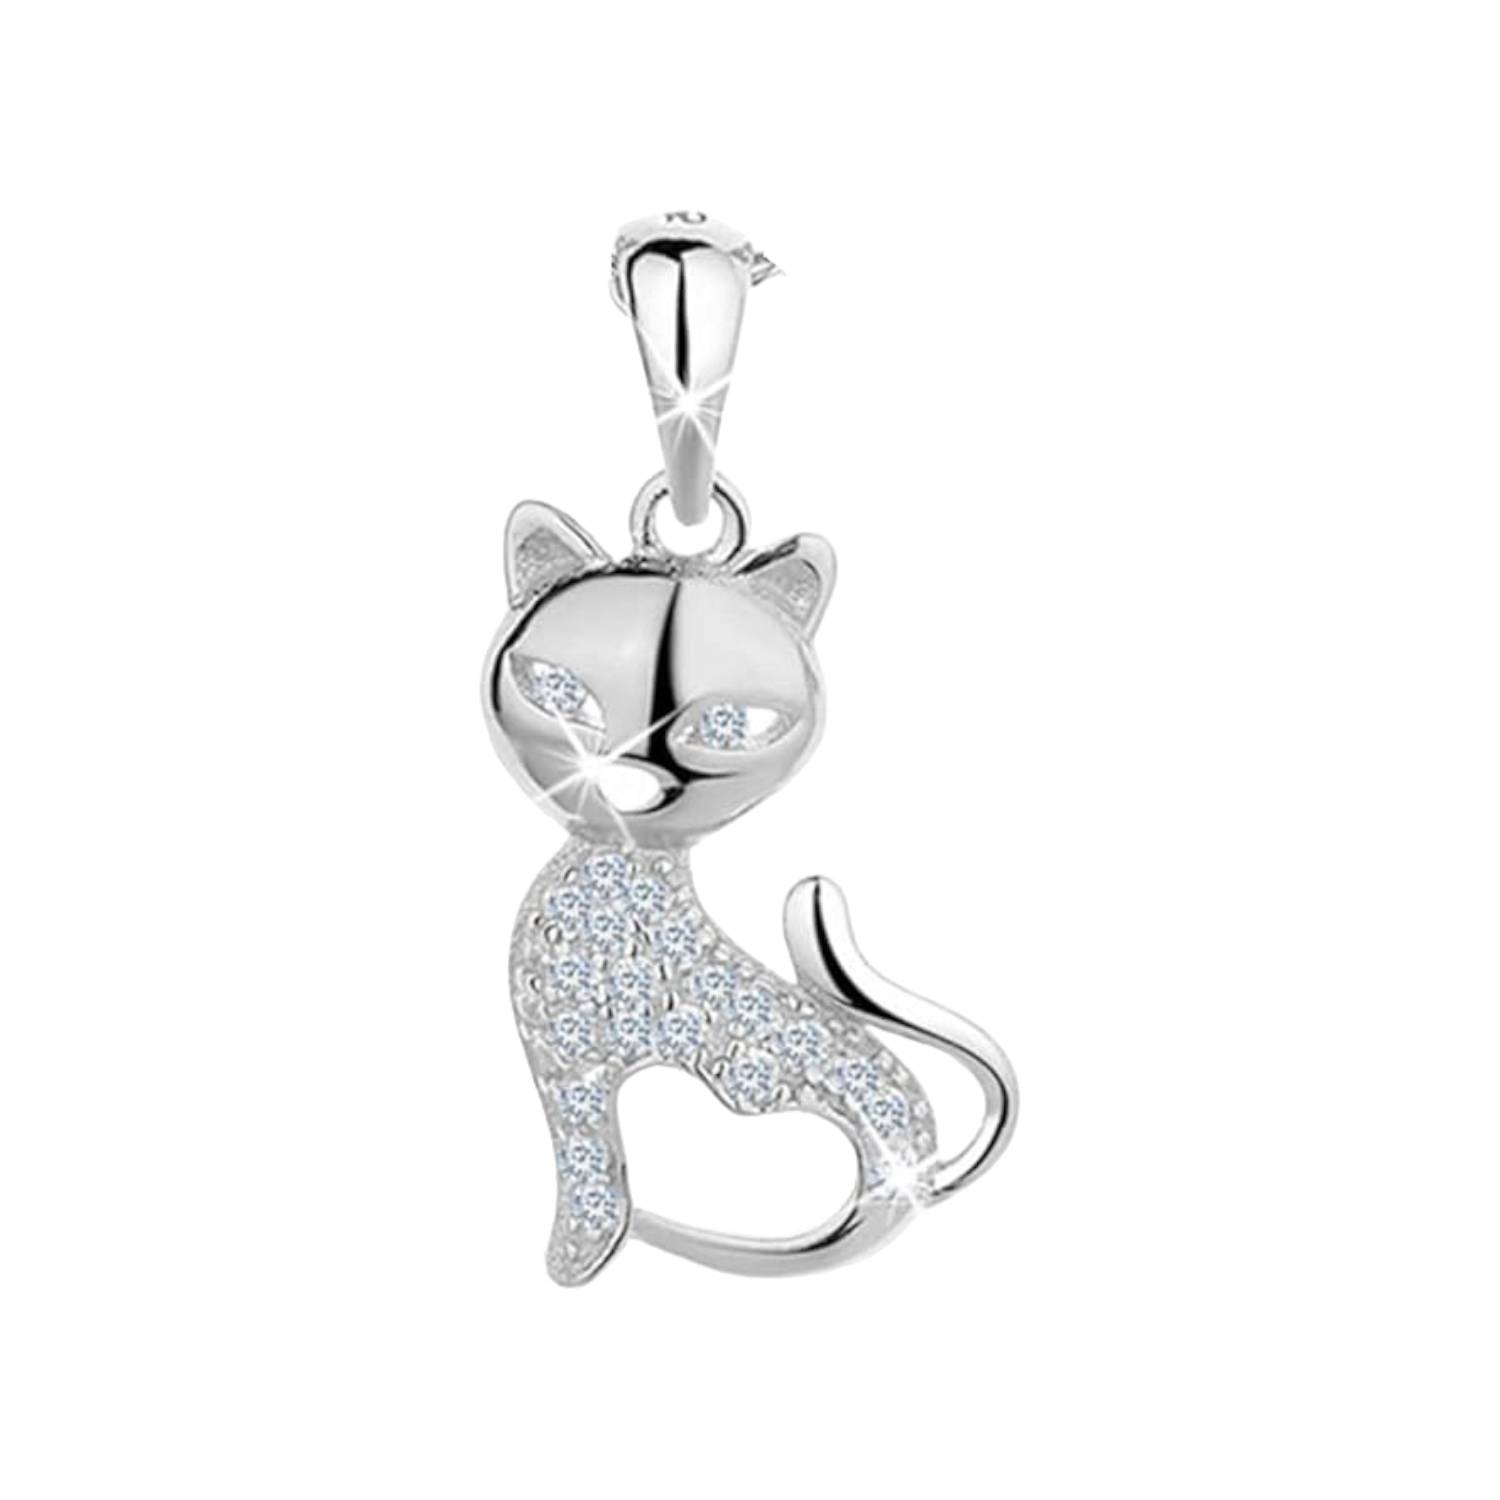 GENERICO colgante gato plata con cristales mas cadena tourbillon mujer  regalo